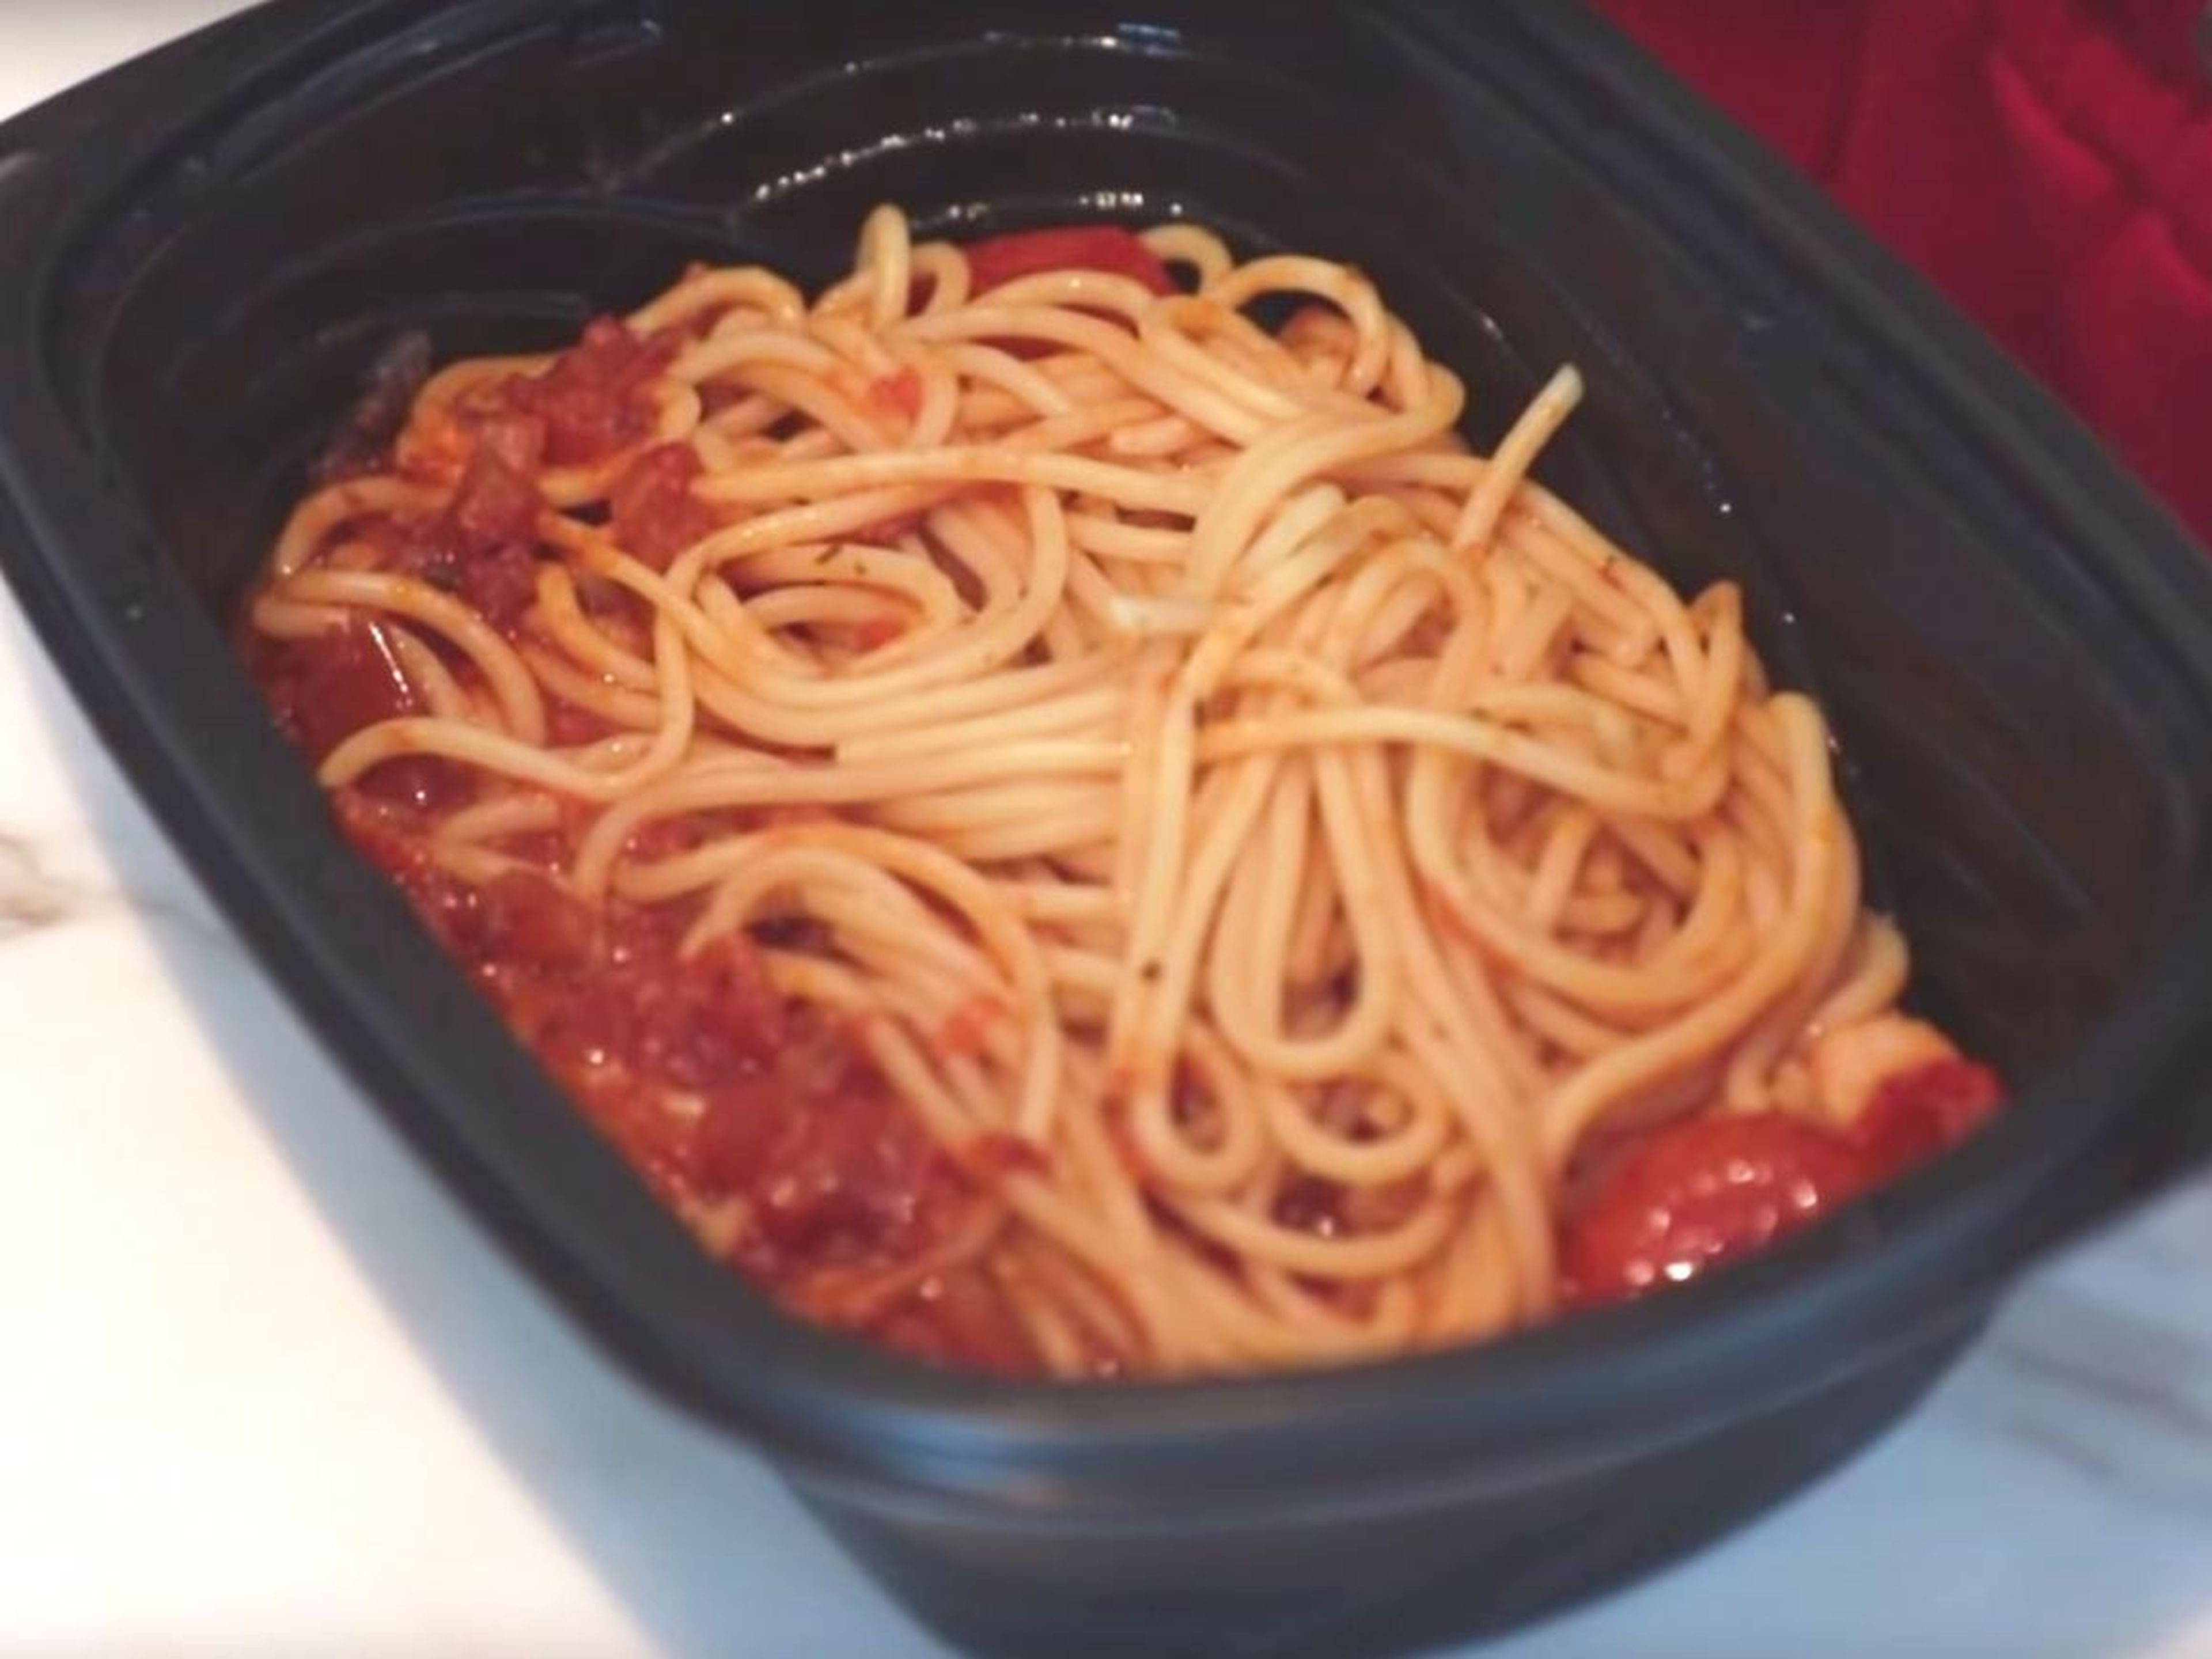 The chili prawn pasta from "The Italian Stallion."